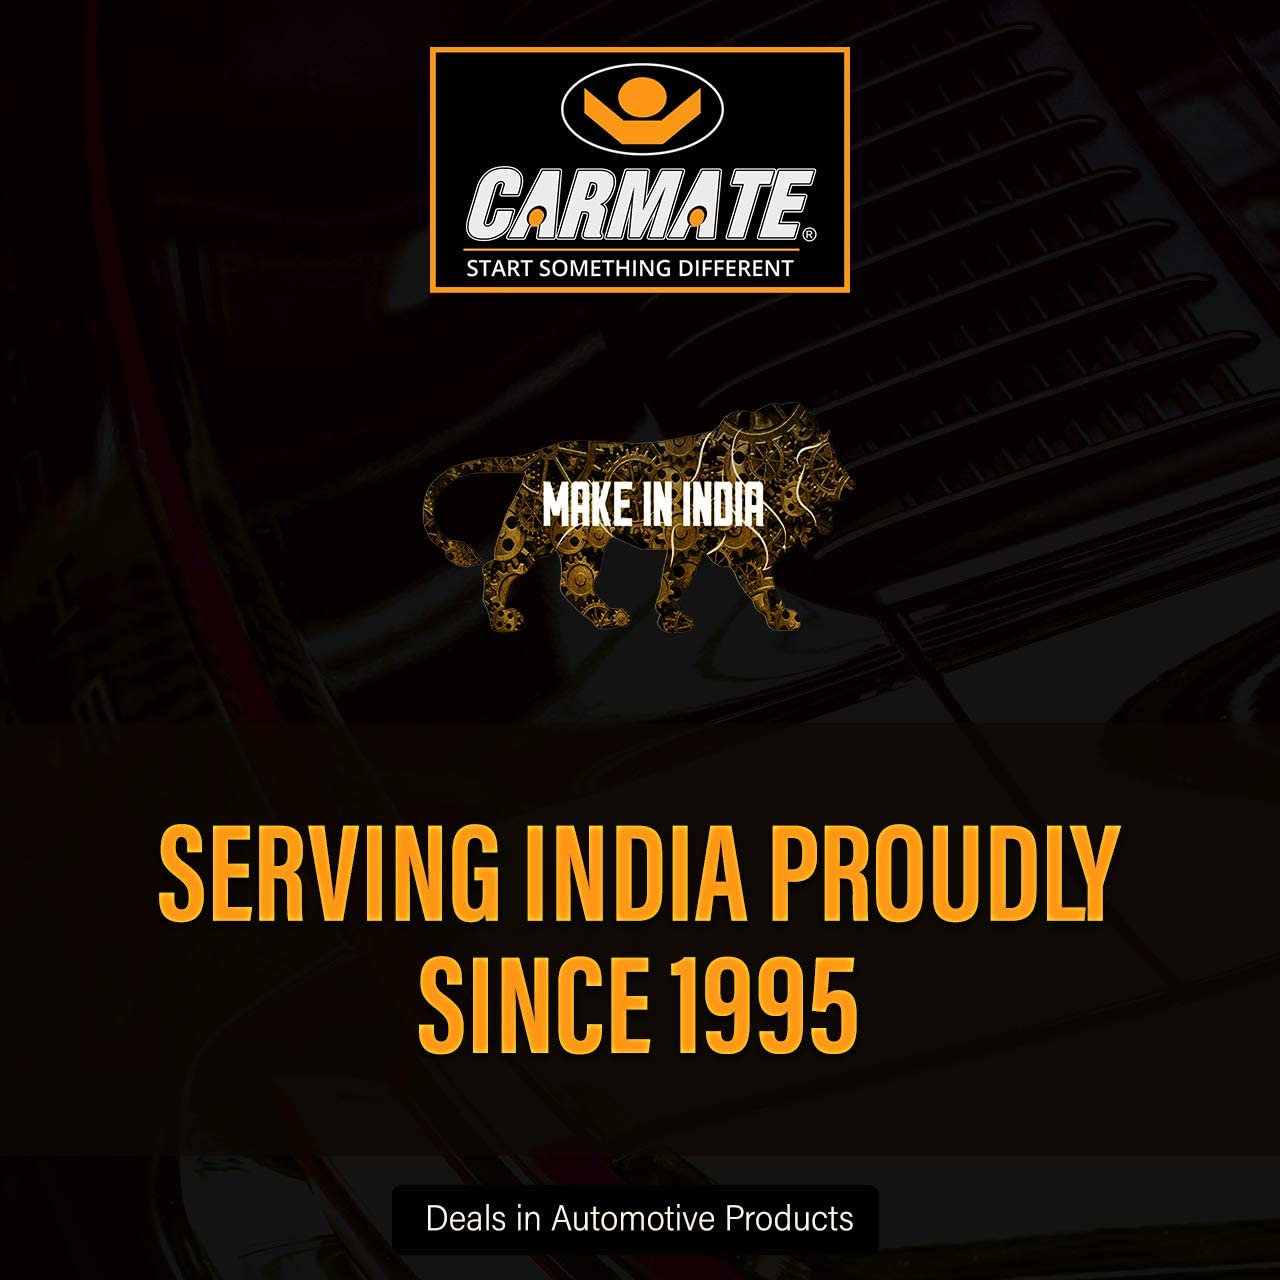 Carmate Prestige Car Body Cover Water Proof (Silver) for  Hyundai - Getz - CARMATE®